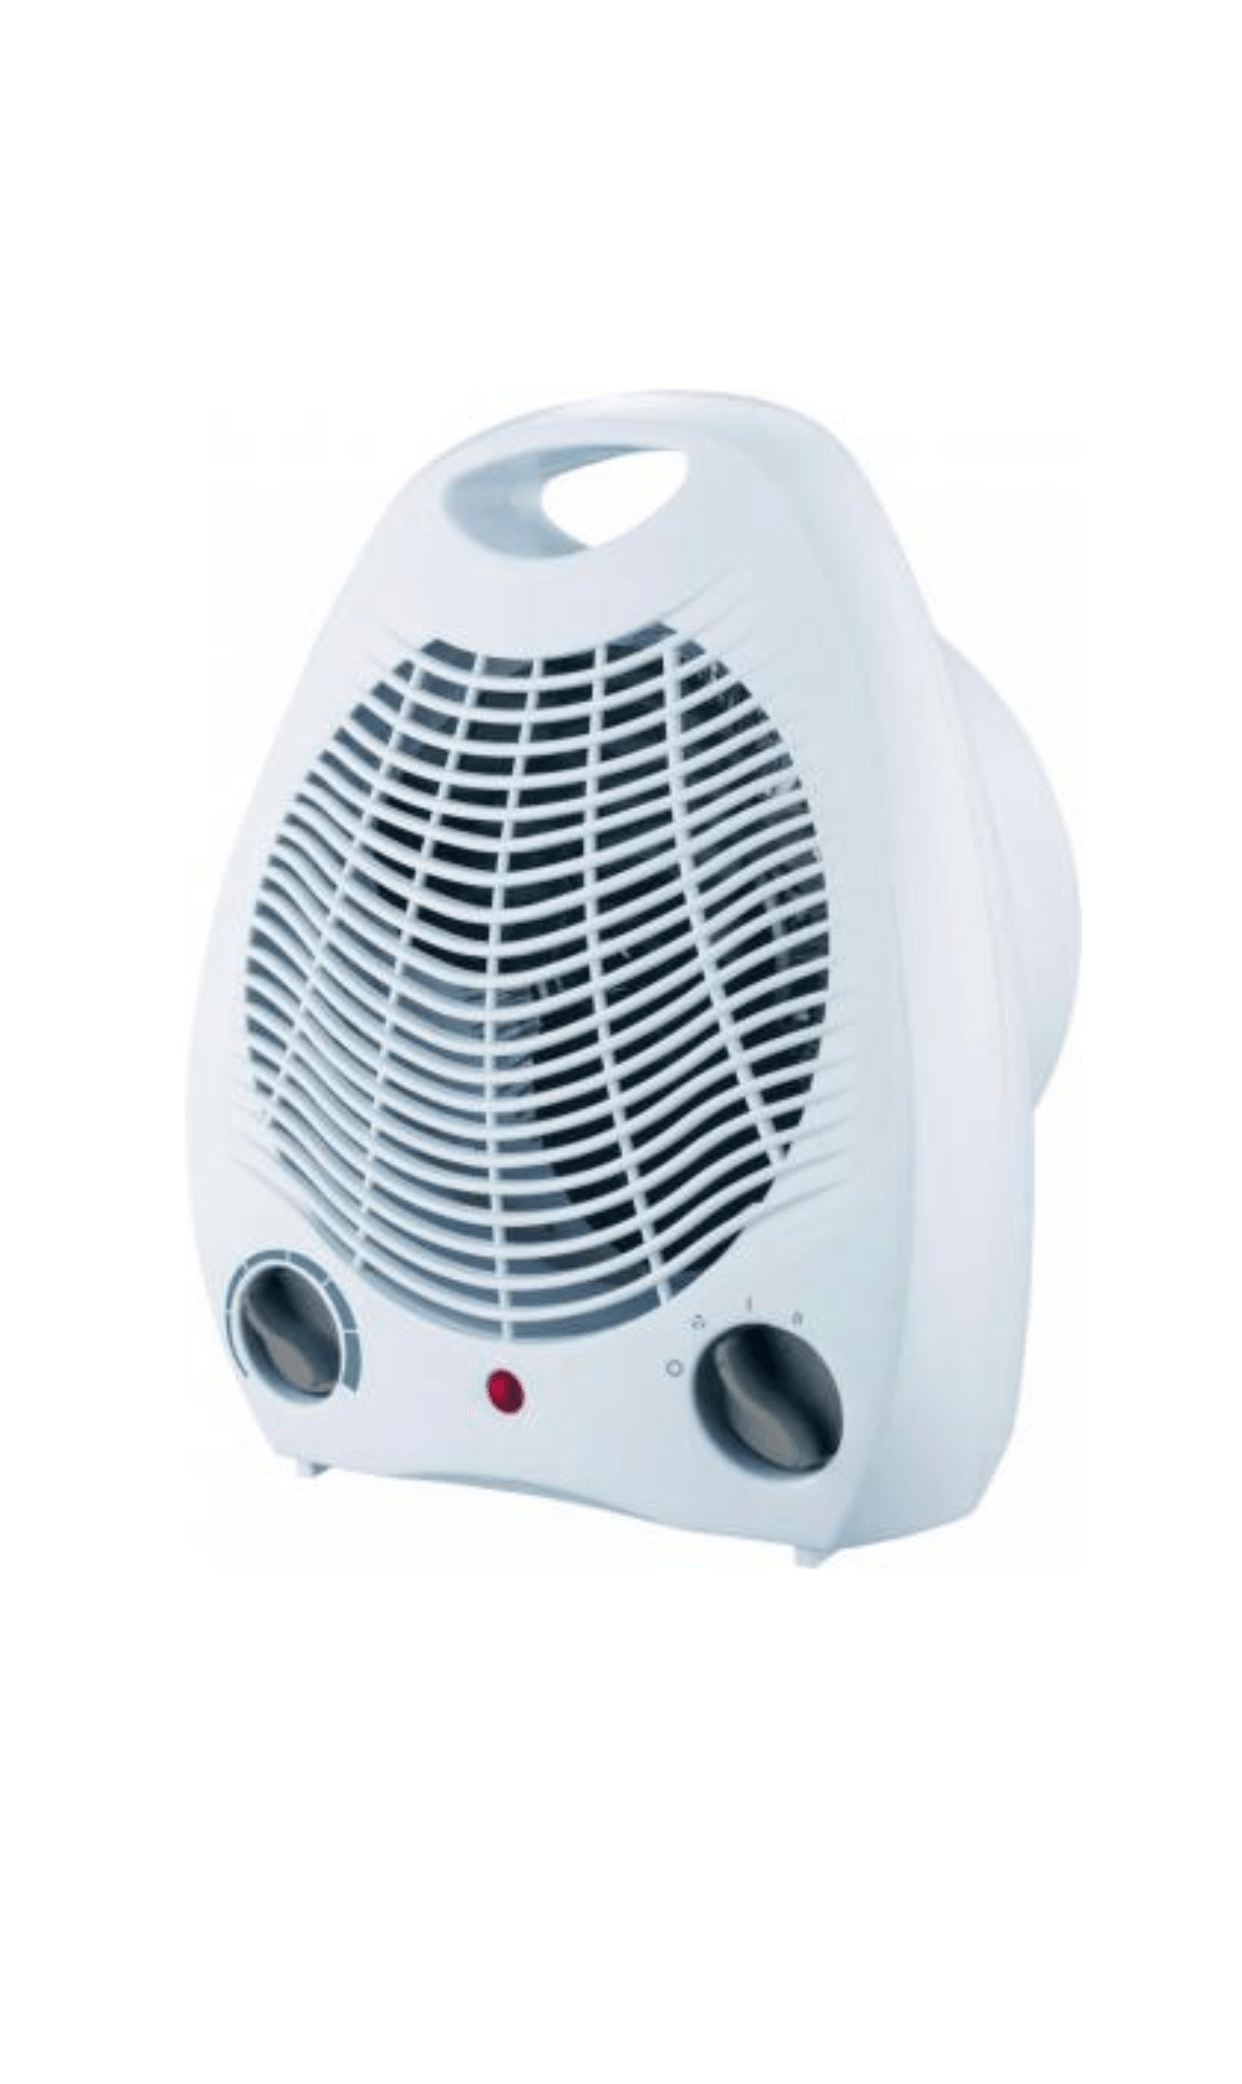 Aeroterma, 1000-2000w, functie de caldura si aer rece, protectie la supraincalzire, termostat adjustabil, indicator led, control automat al caldurii, alb